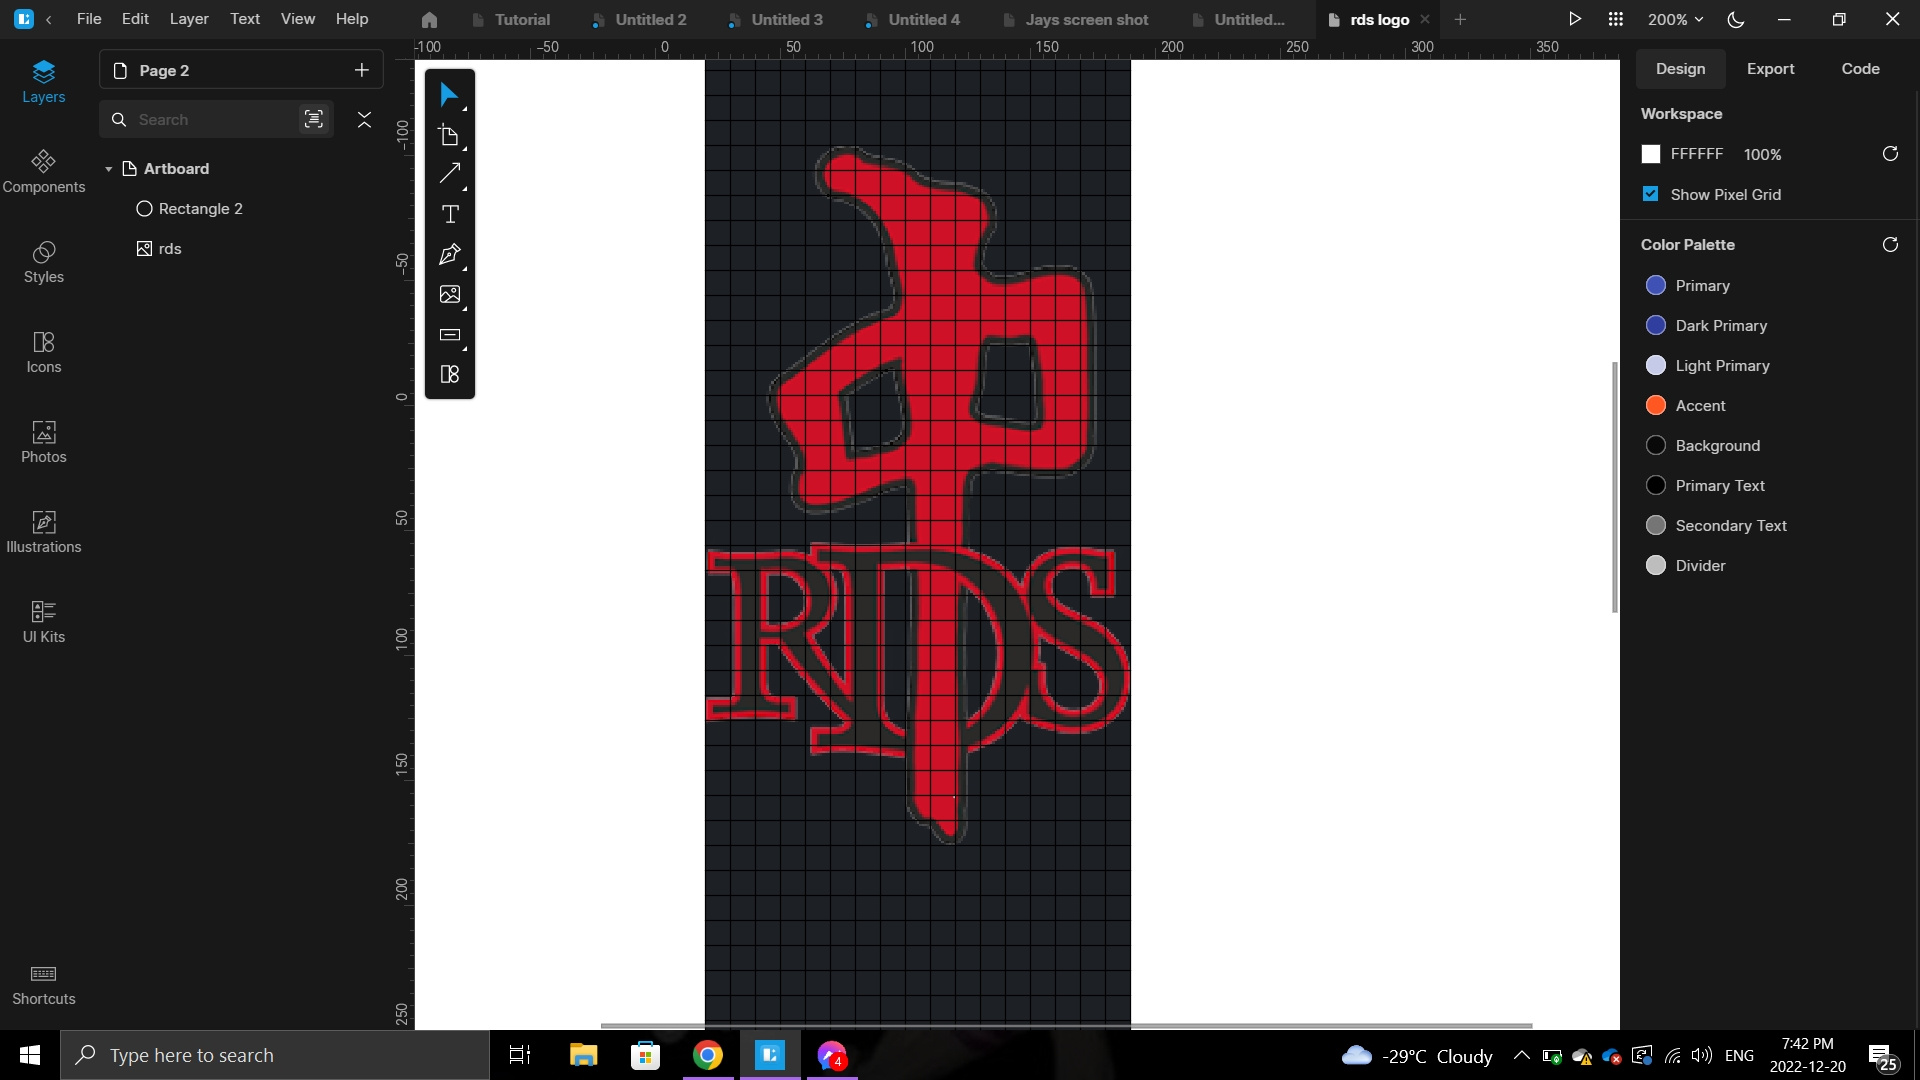 rds logo screenshot.jpg